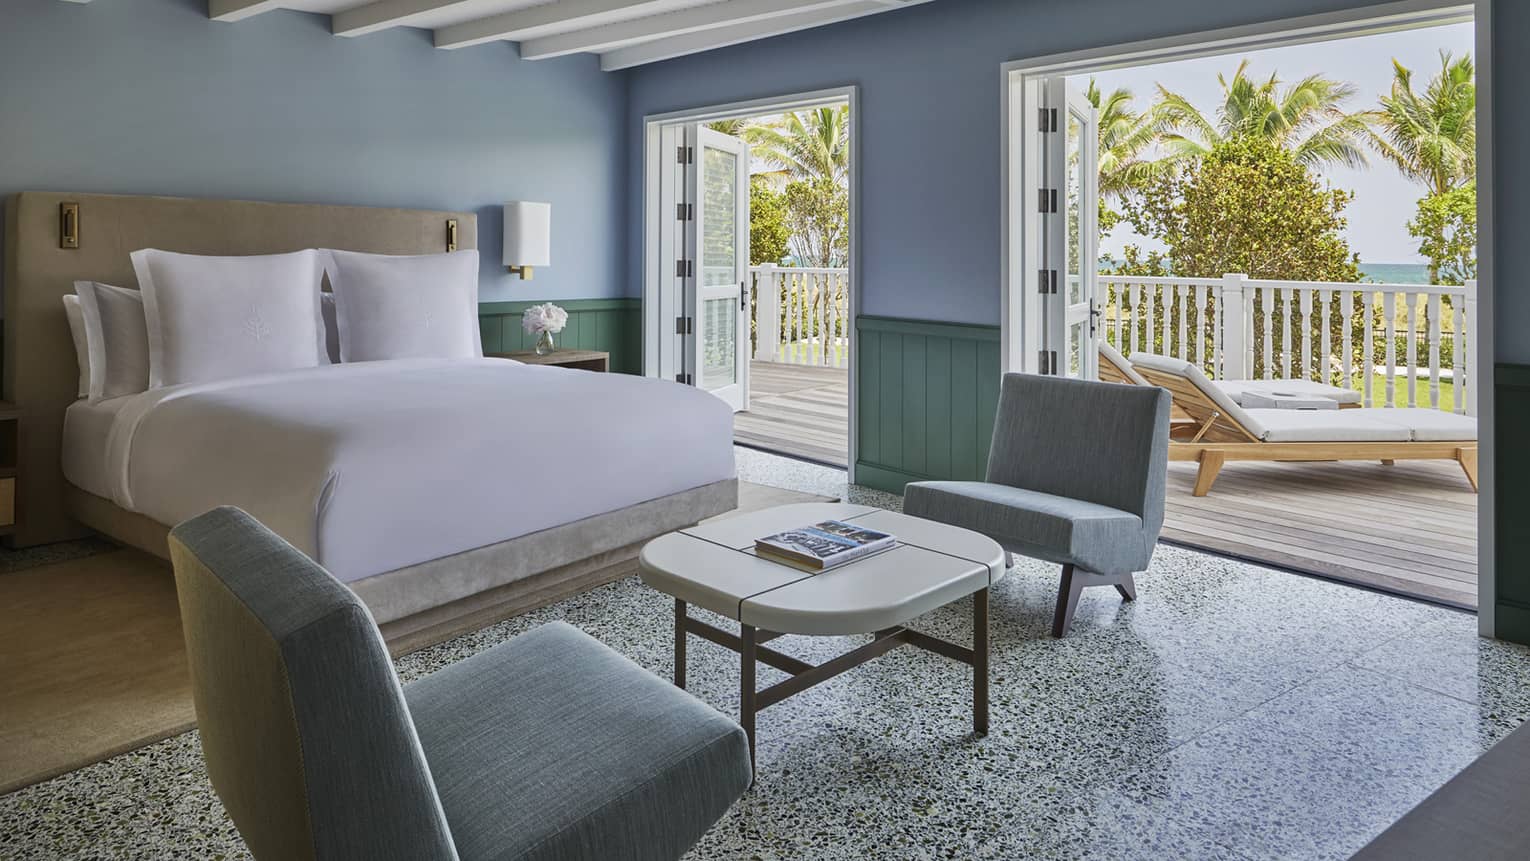 Beachfront Cabana Studio with terrazzo flooring, blue walls and balcony with ocean views